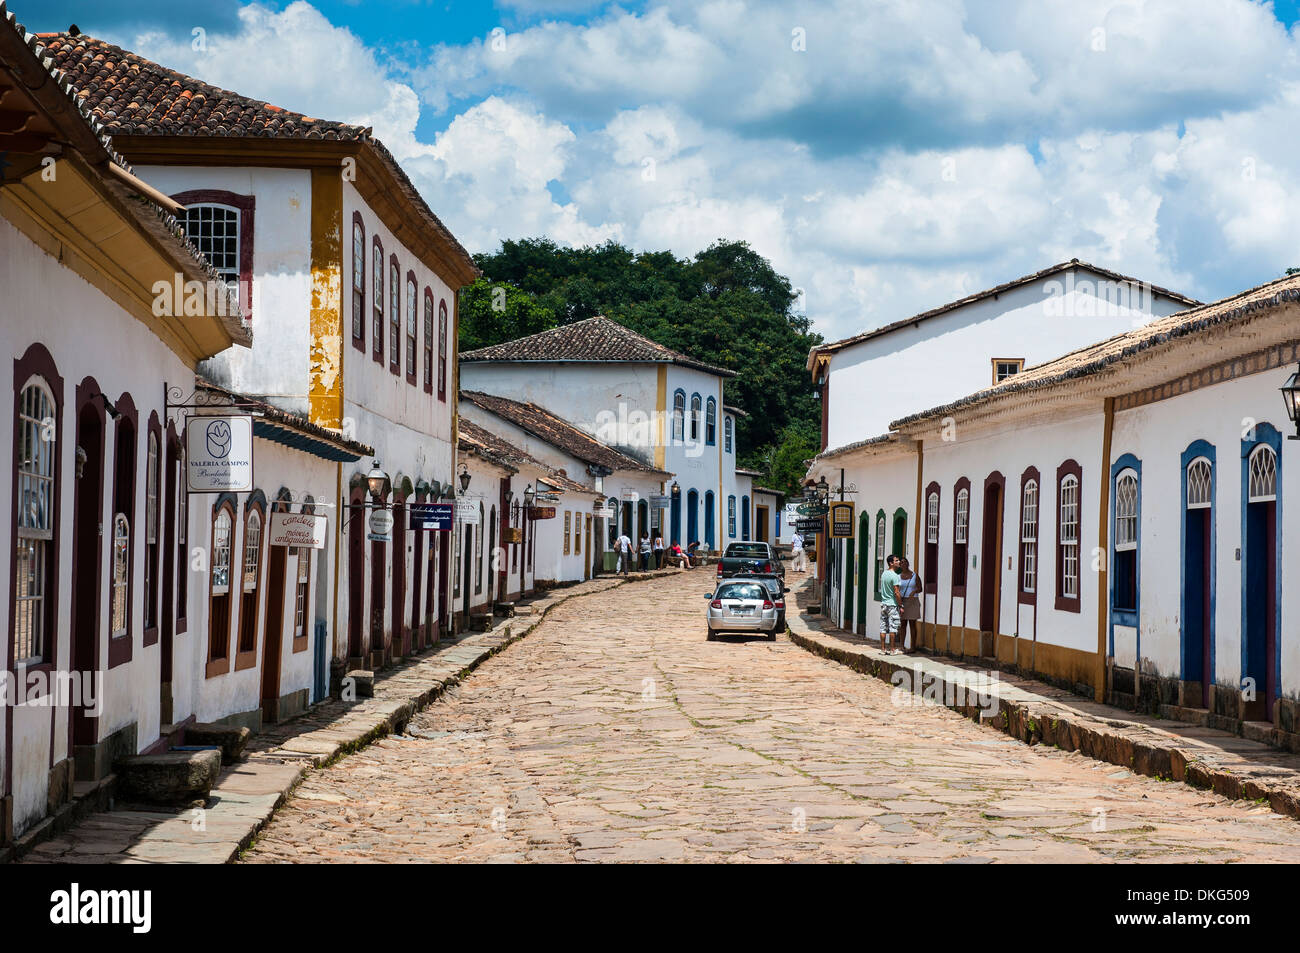 Histórica ciudad minera, Tiradentes, Minas Gerais, Brasil, América del Sur Foto de stock